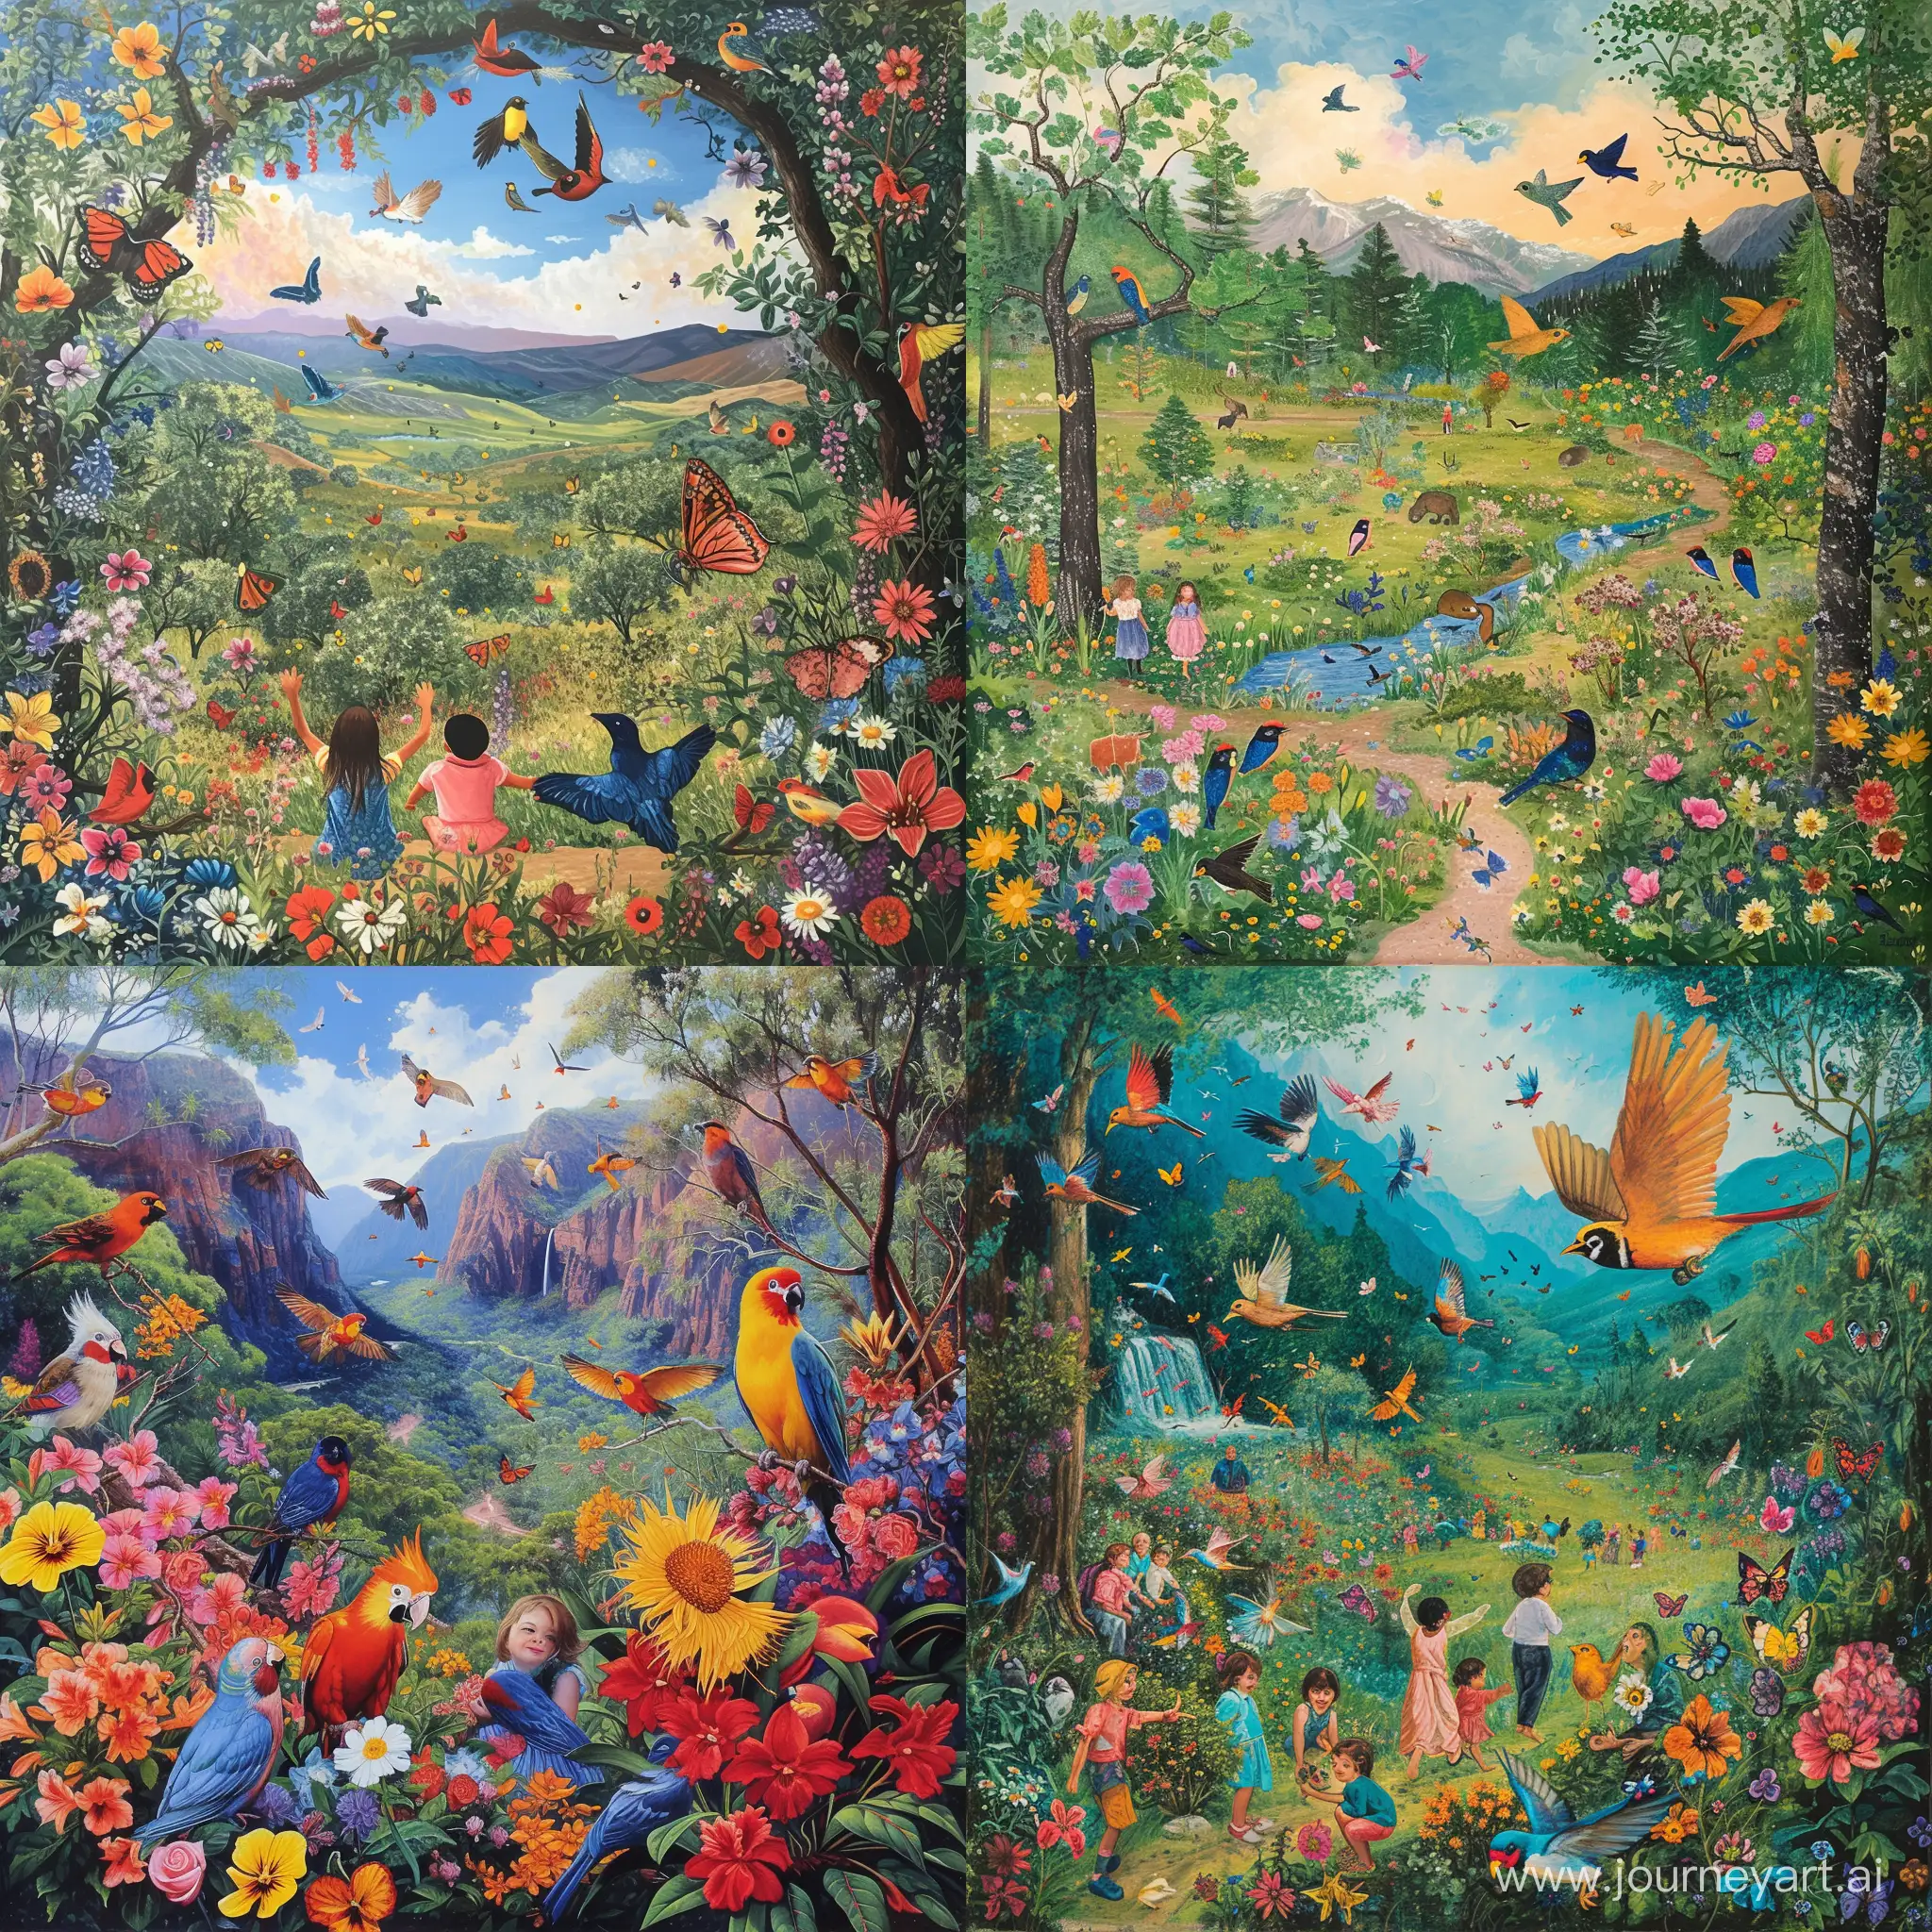 Joyful-Paradise-Valley-Children-Frolicking-Among-Blossoms-and-Birds